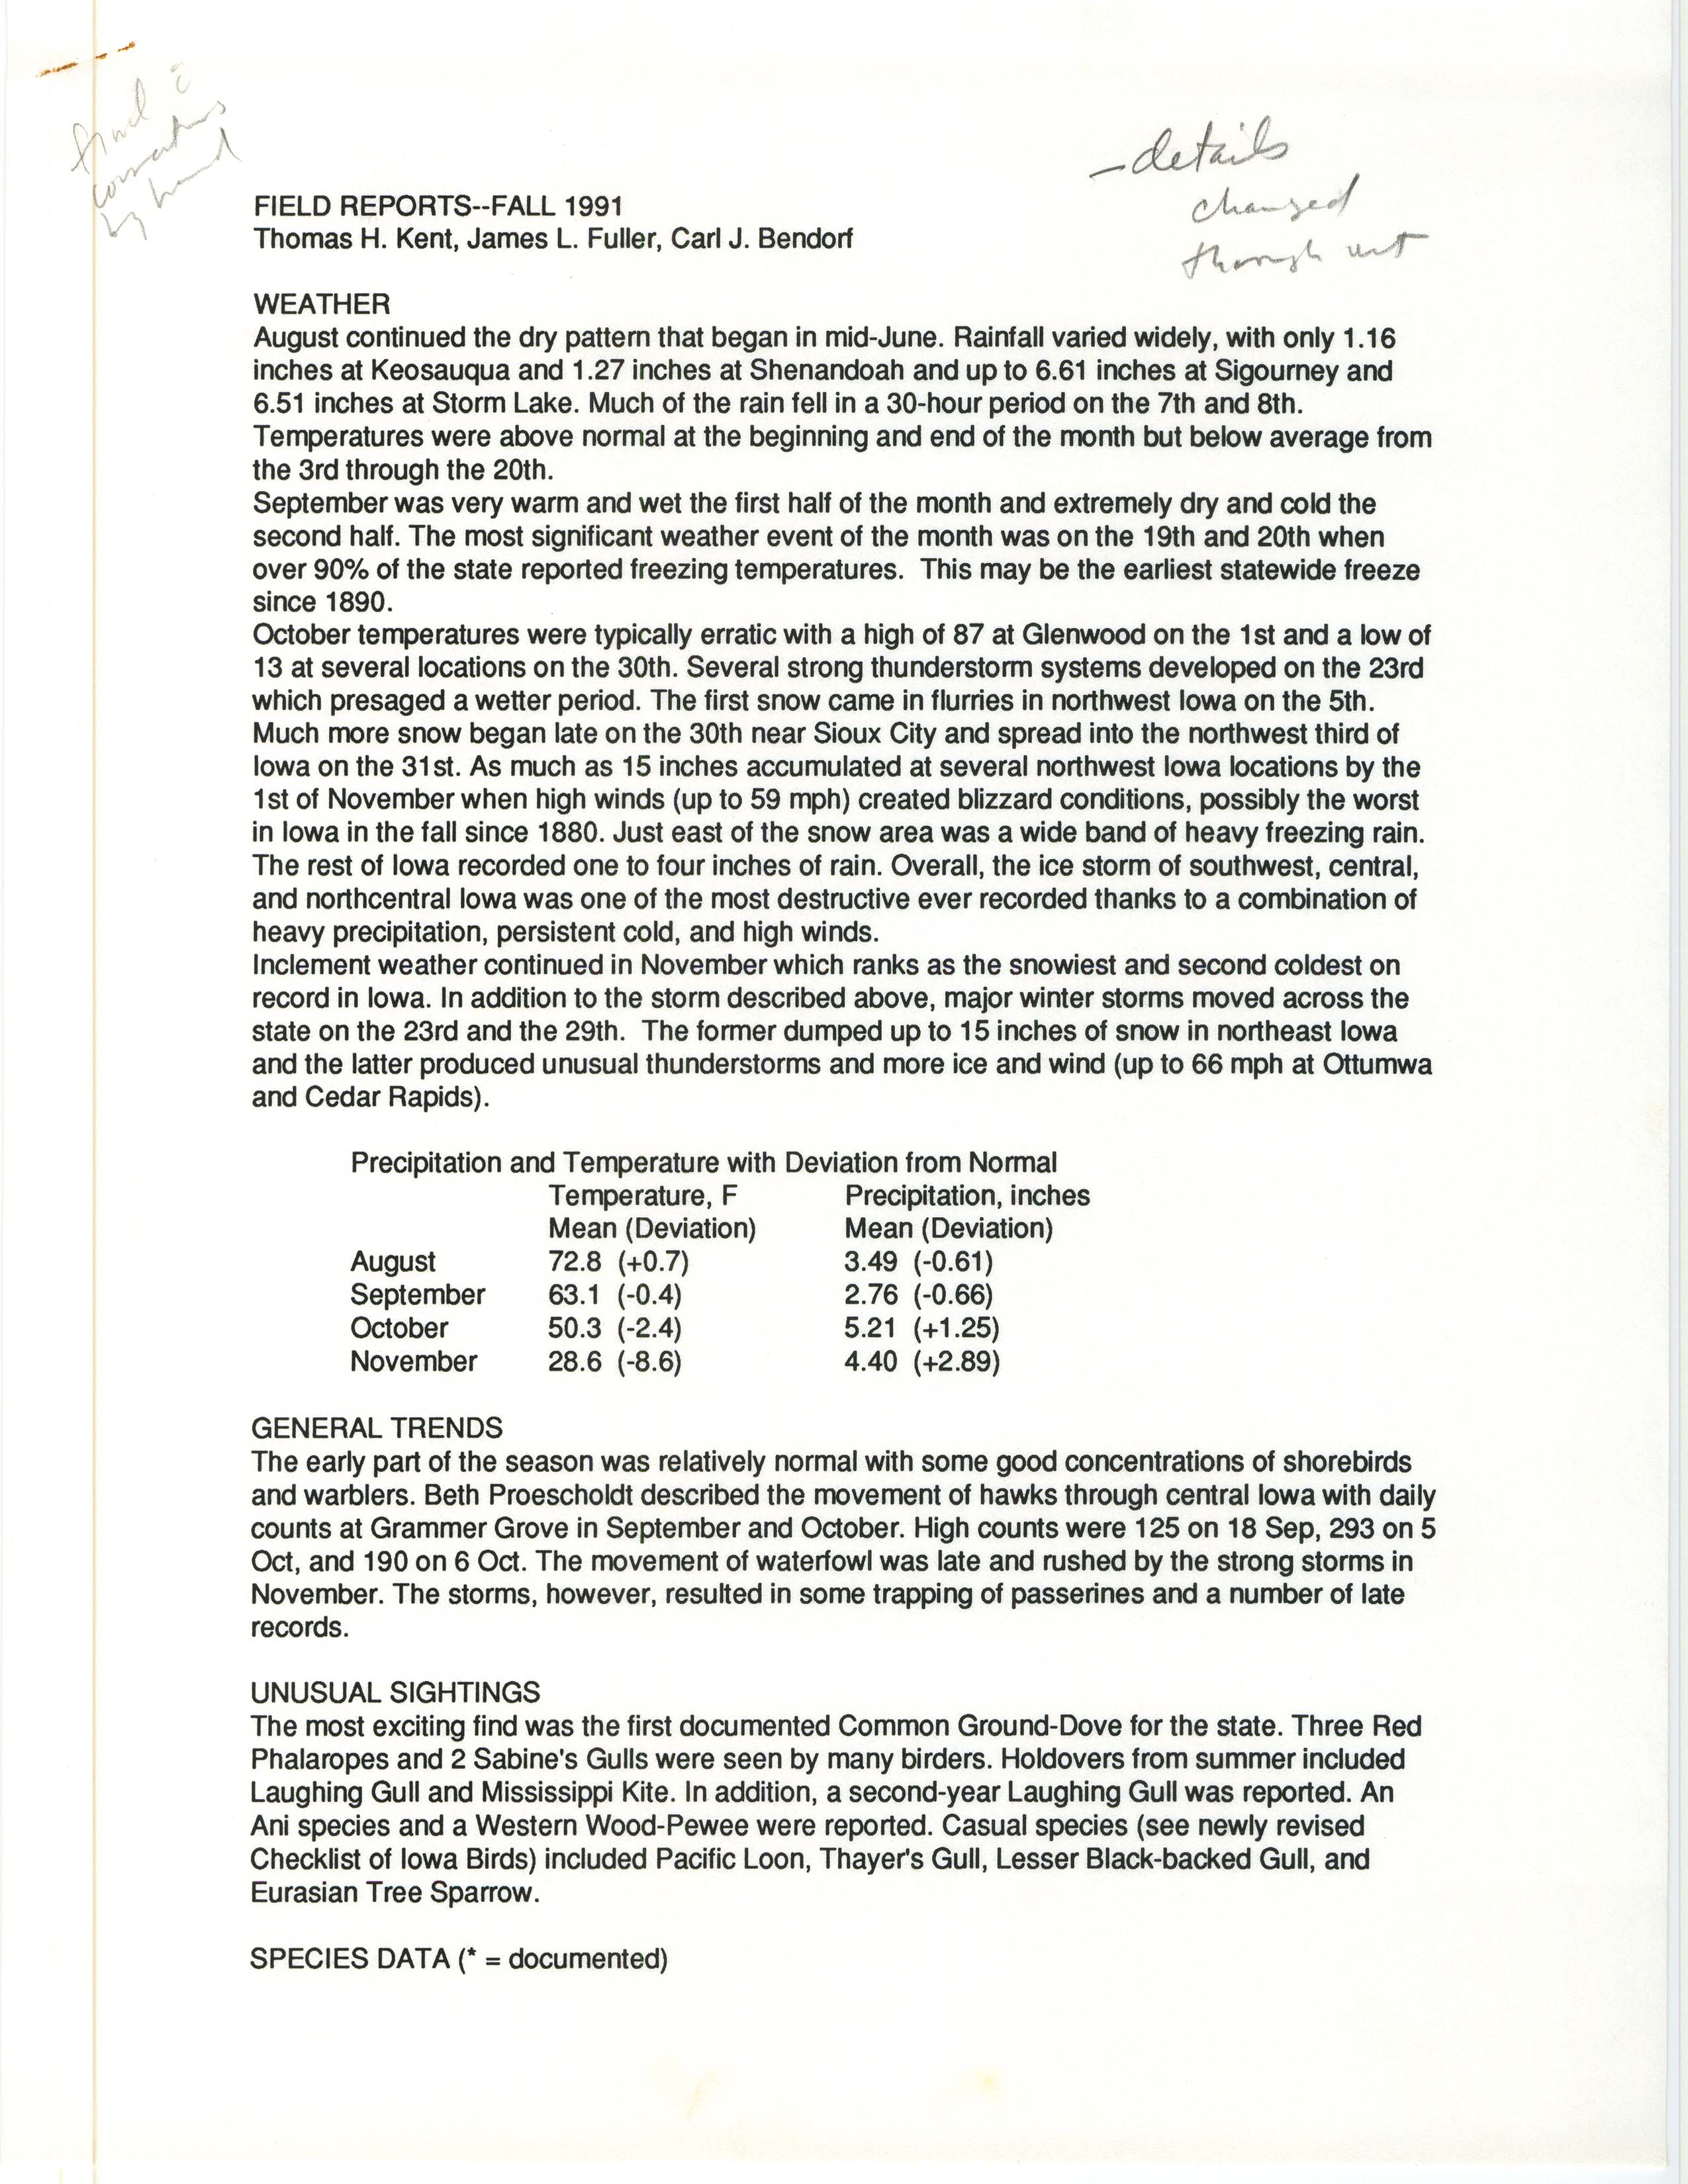 Iowa Ornithologists' Union, Quarterly field report, fall 1991